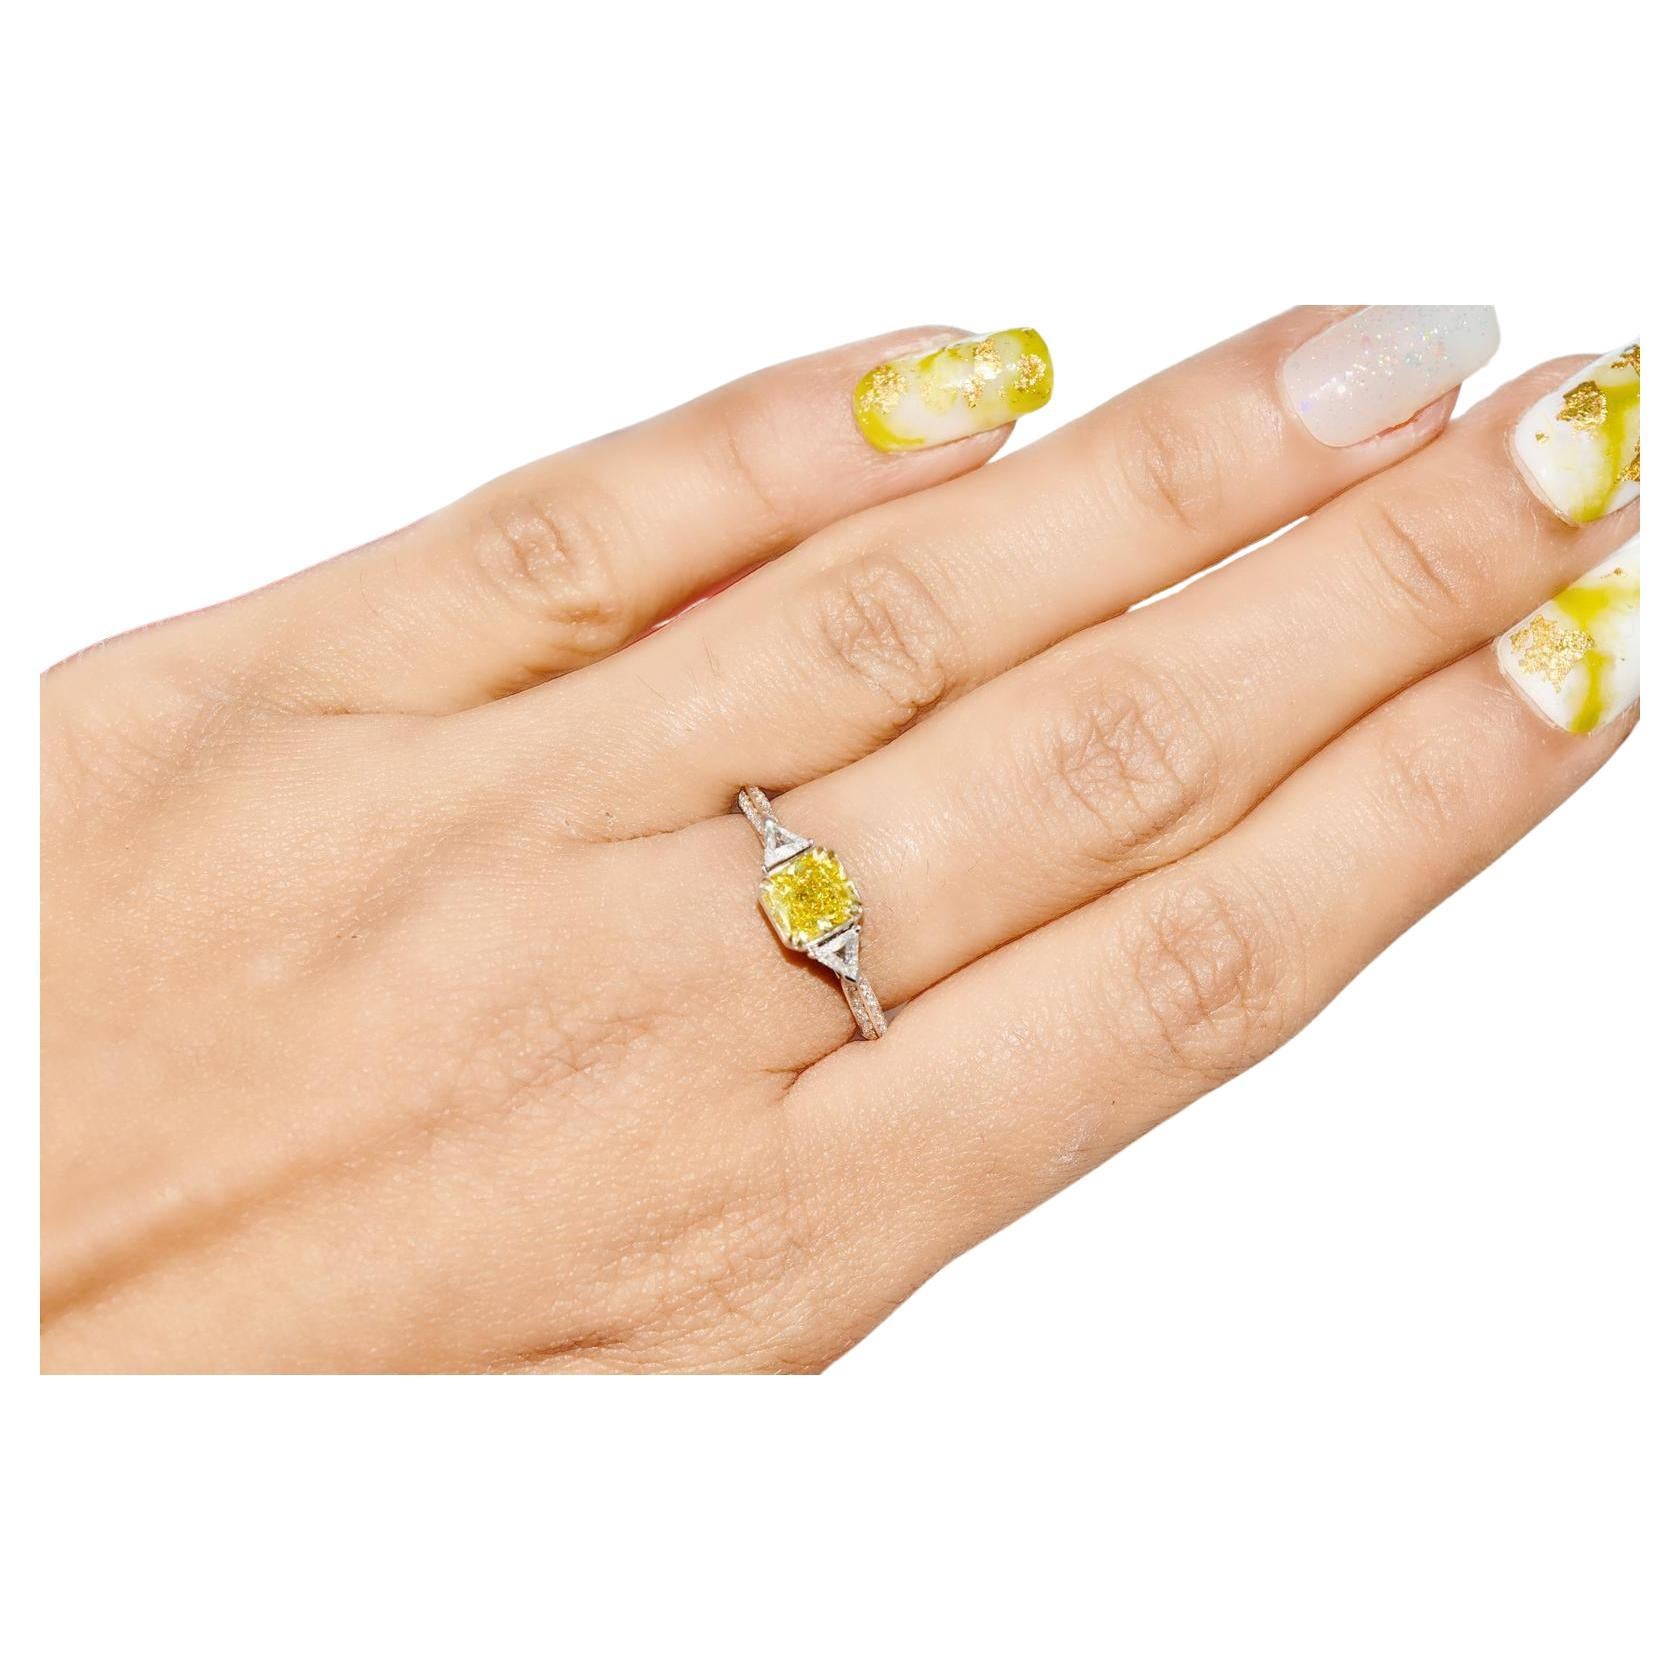 GIA Certified 1.01 Carat Fancy Deep Yellow Diamond Ring VS2 Clarity For Sale